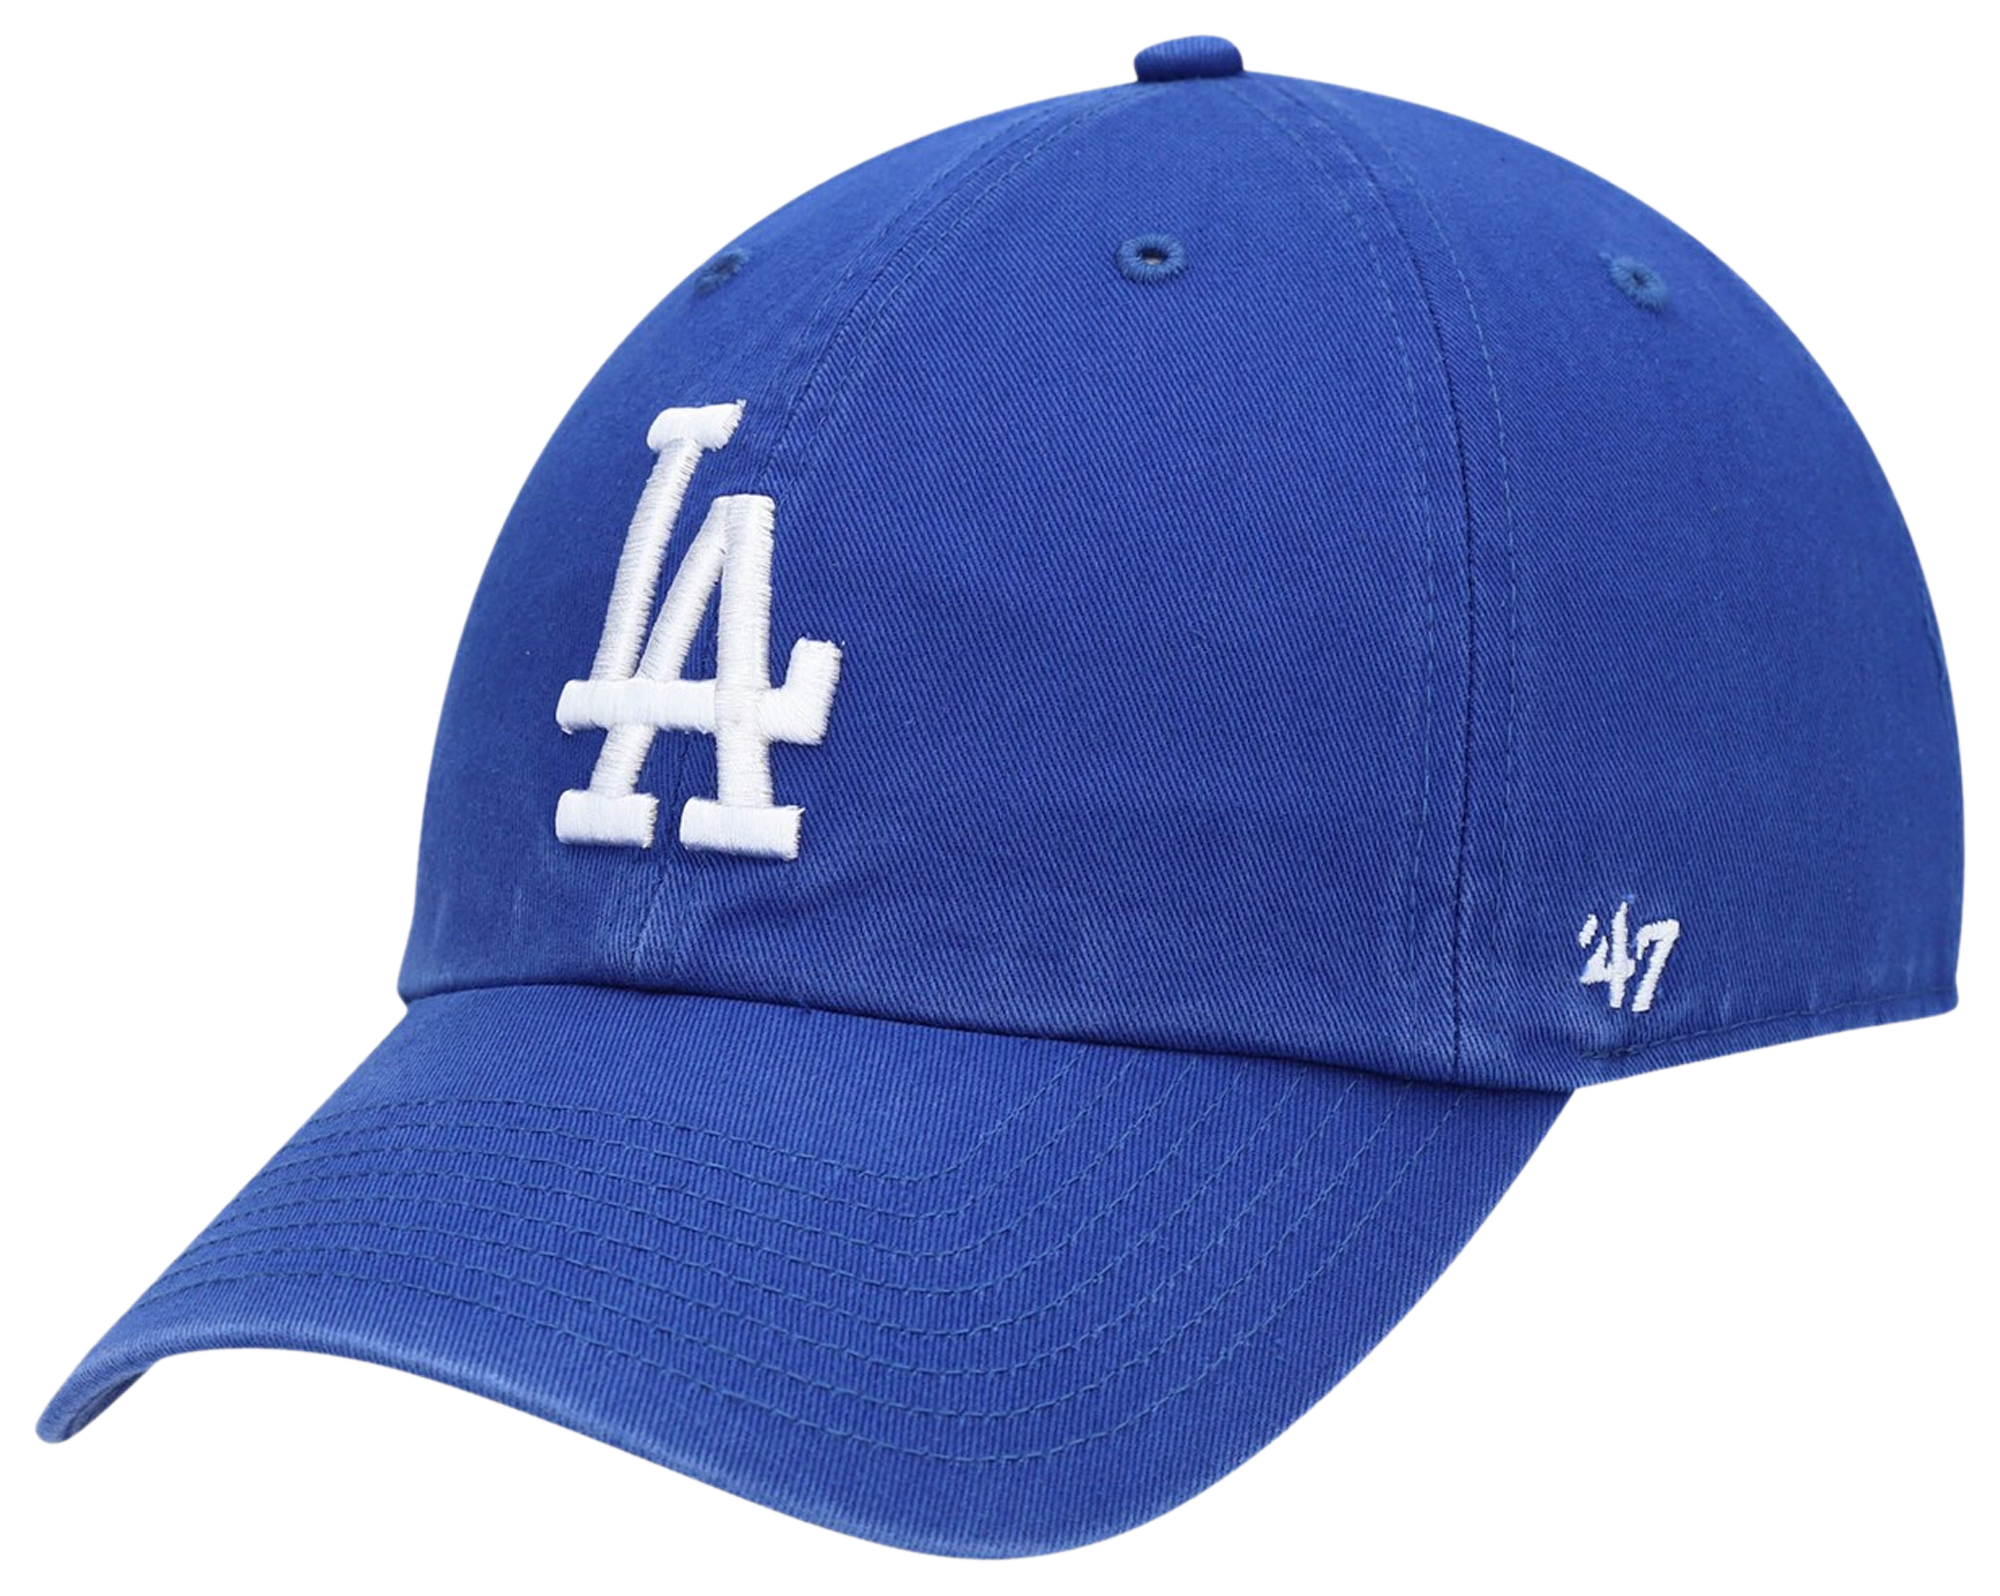 47 Brand MLB LA Dodgers Baseball Cap In Royal Blue for Men